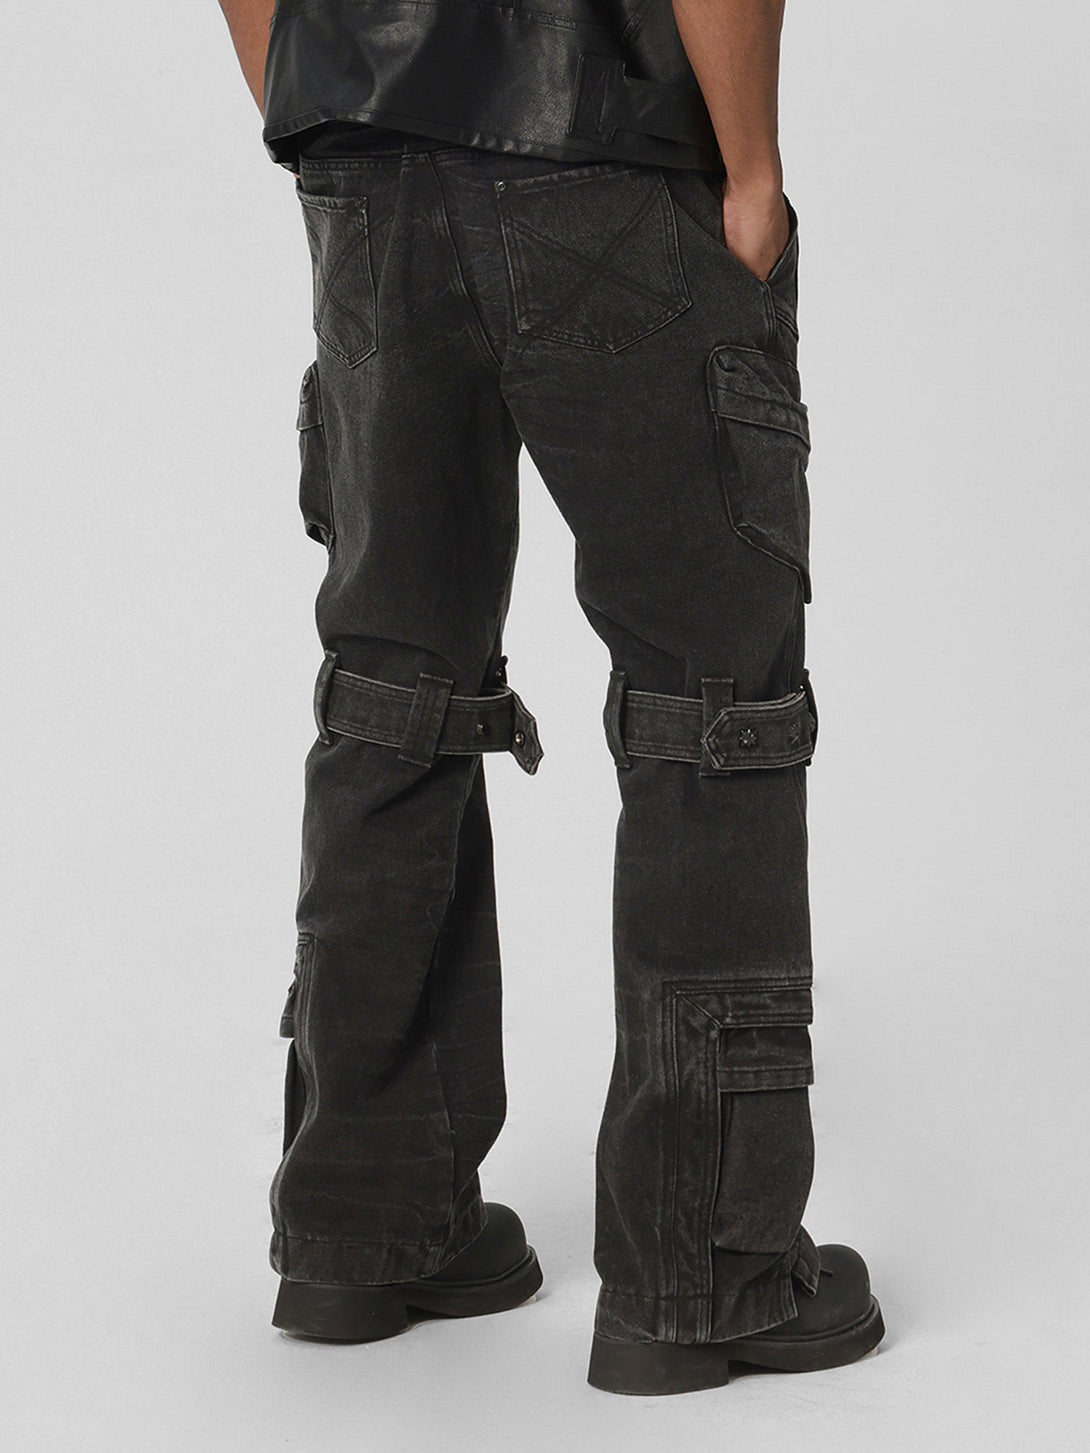 Majesda® - American Retro Loose Strappy Work Jeans - 1872- Outfit Ideas - Streetwear Fashion - majesda.com